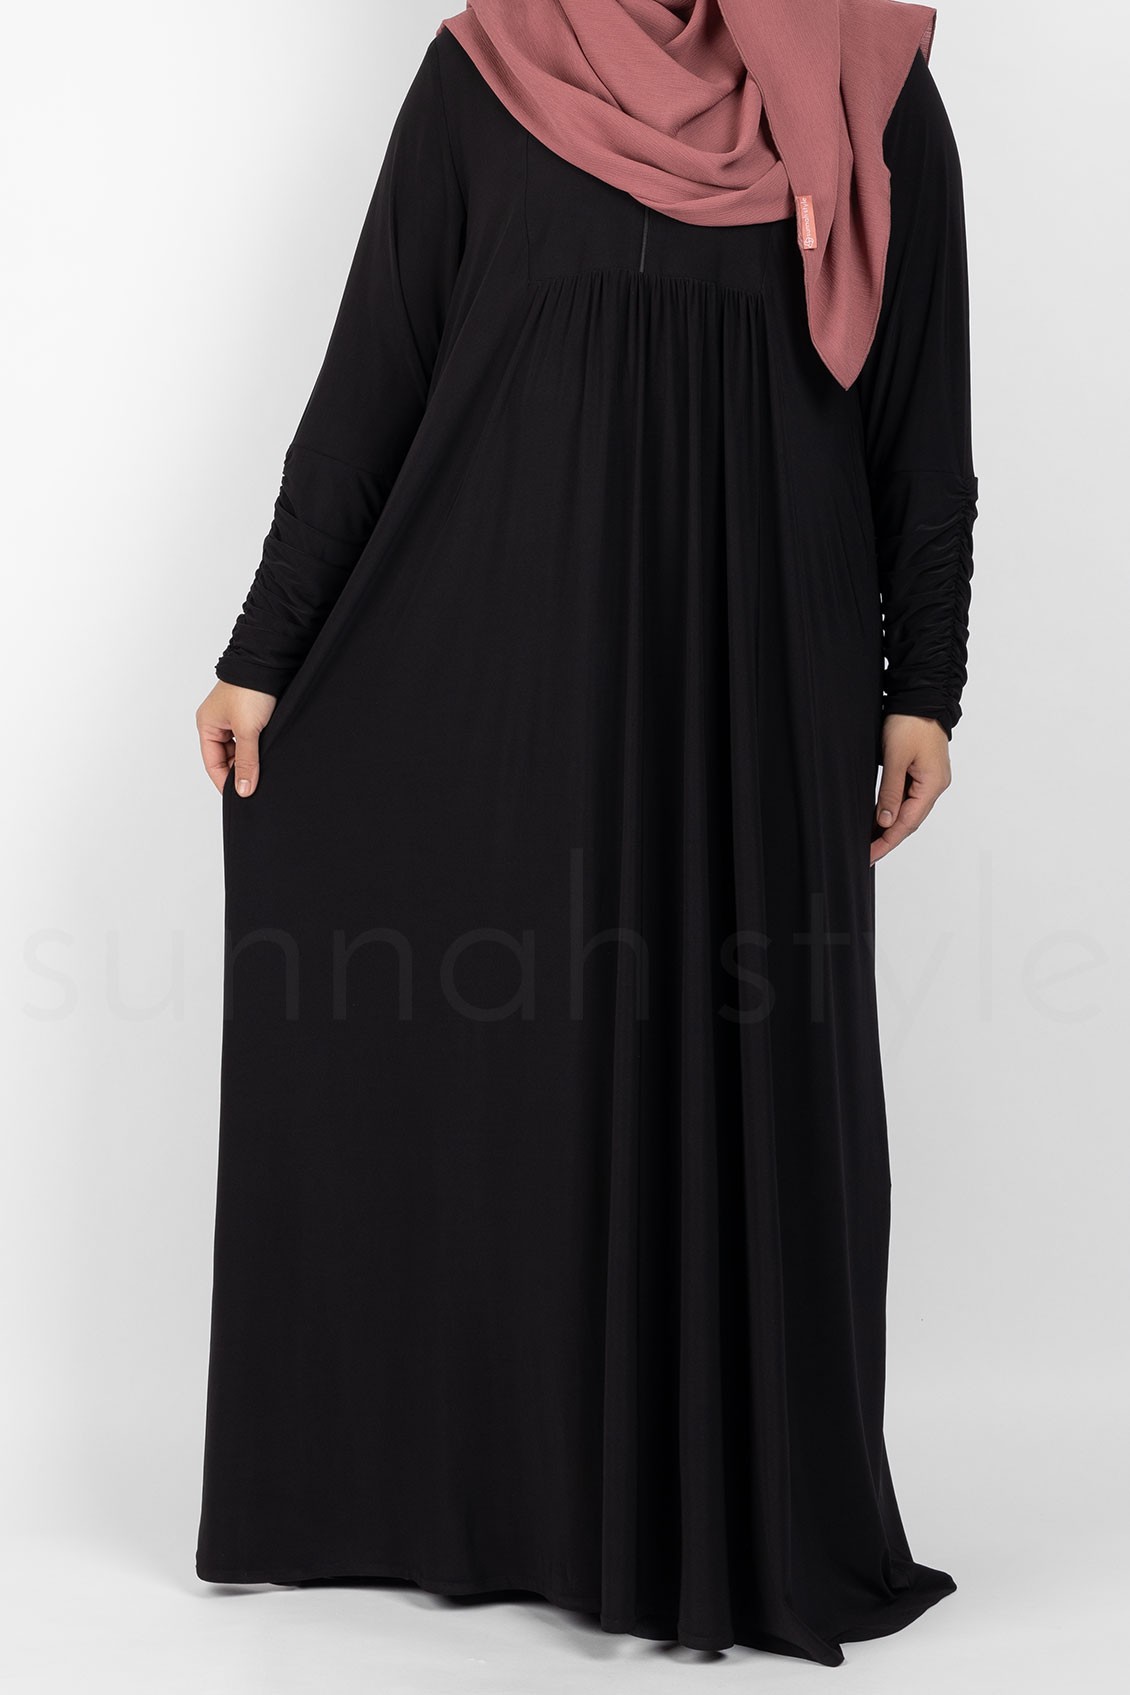 Sunnah Style Flourish Jersey Abaya Black